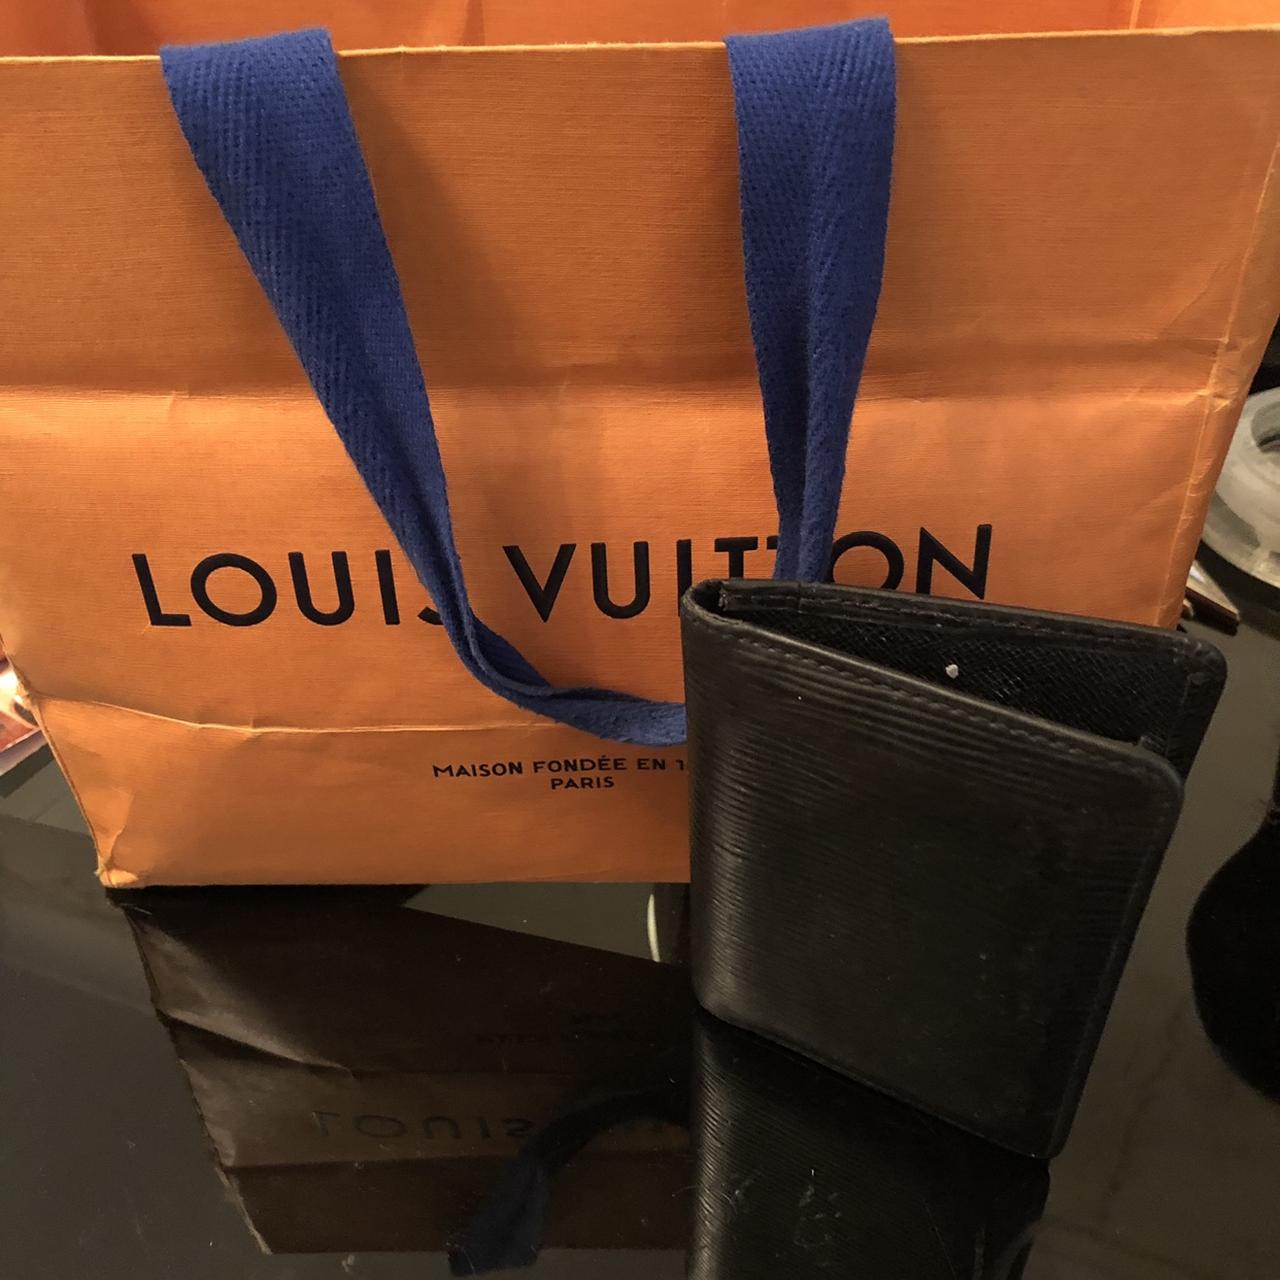 Louis Vuitton Men's Goods 